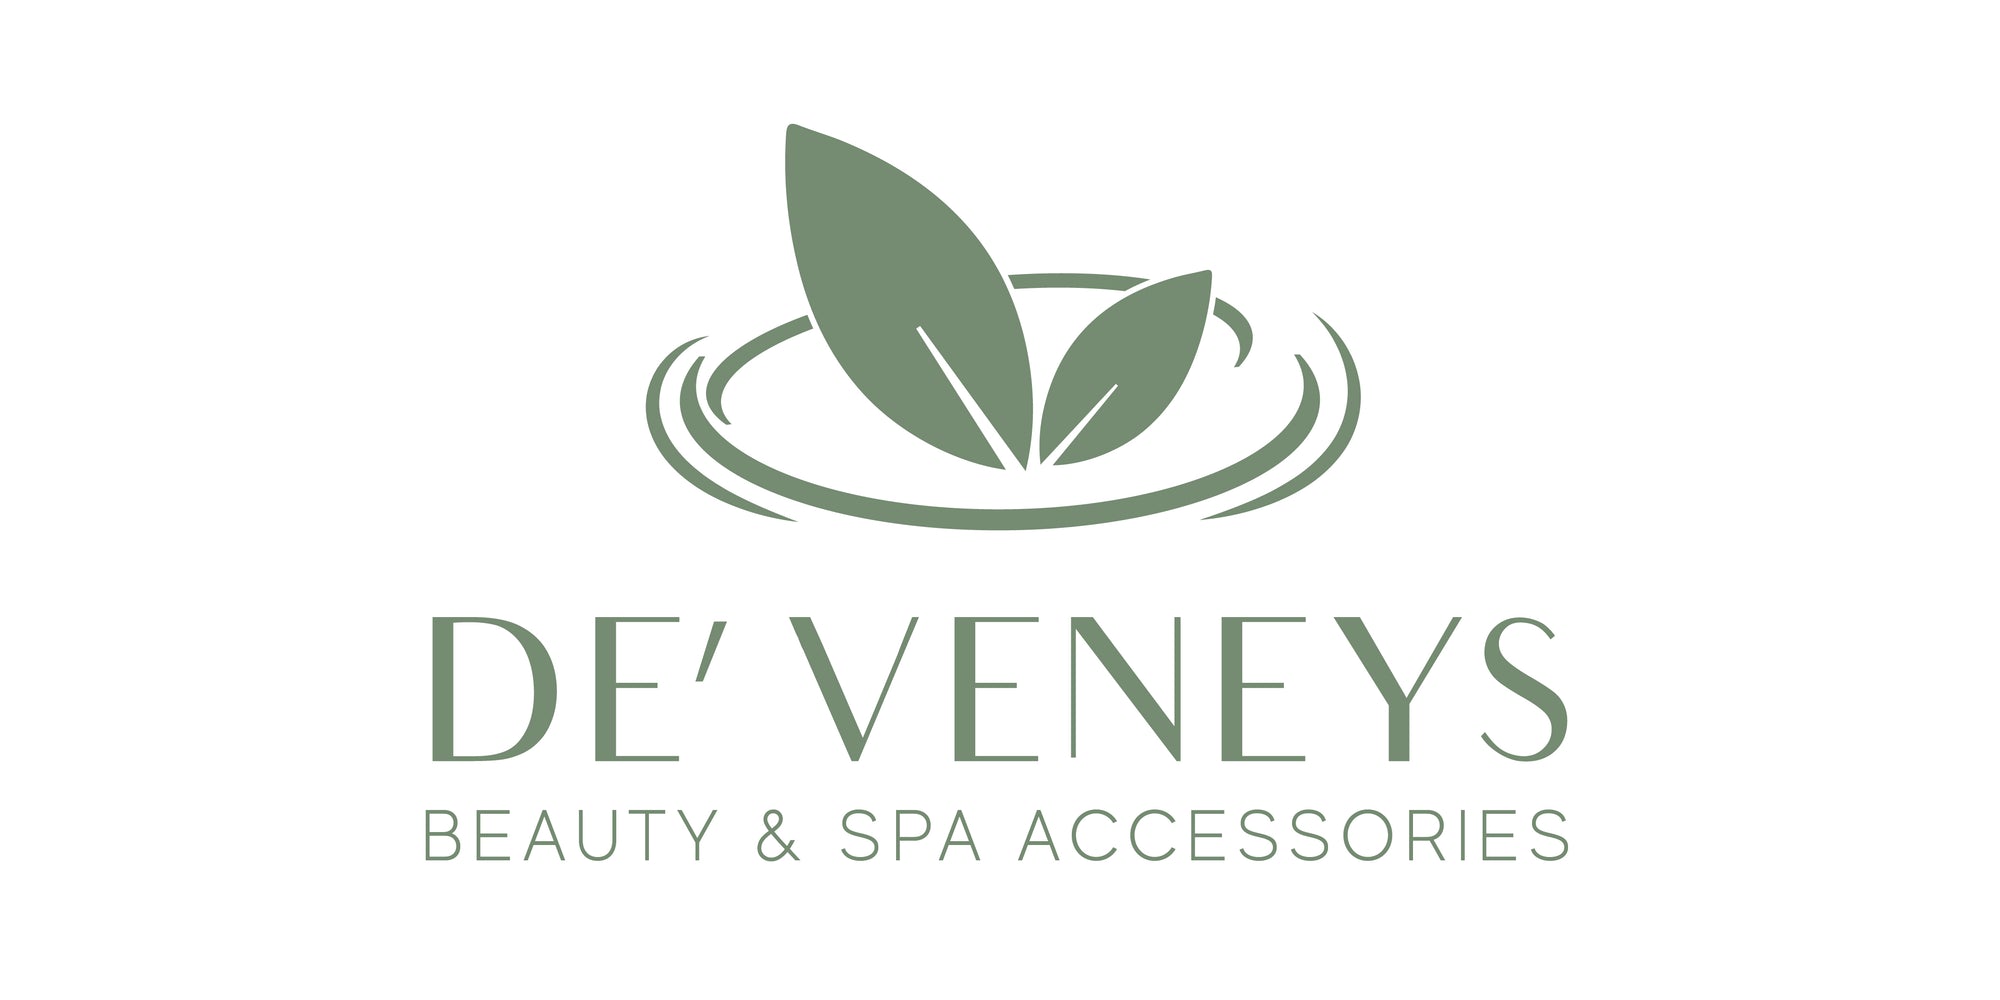 beauty accessories, beauty, make up, skin, beauty tools, vegan, natural, bio degradable